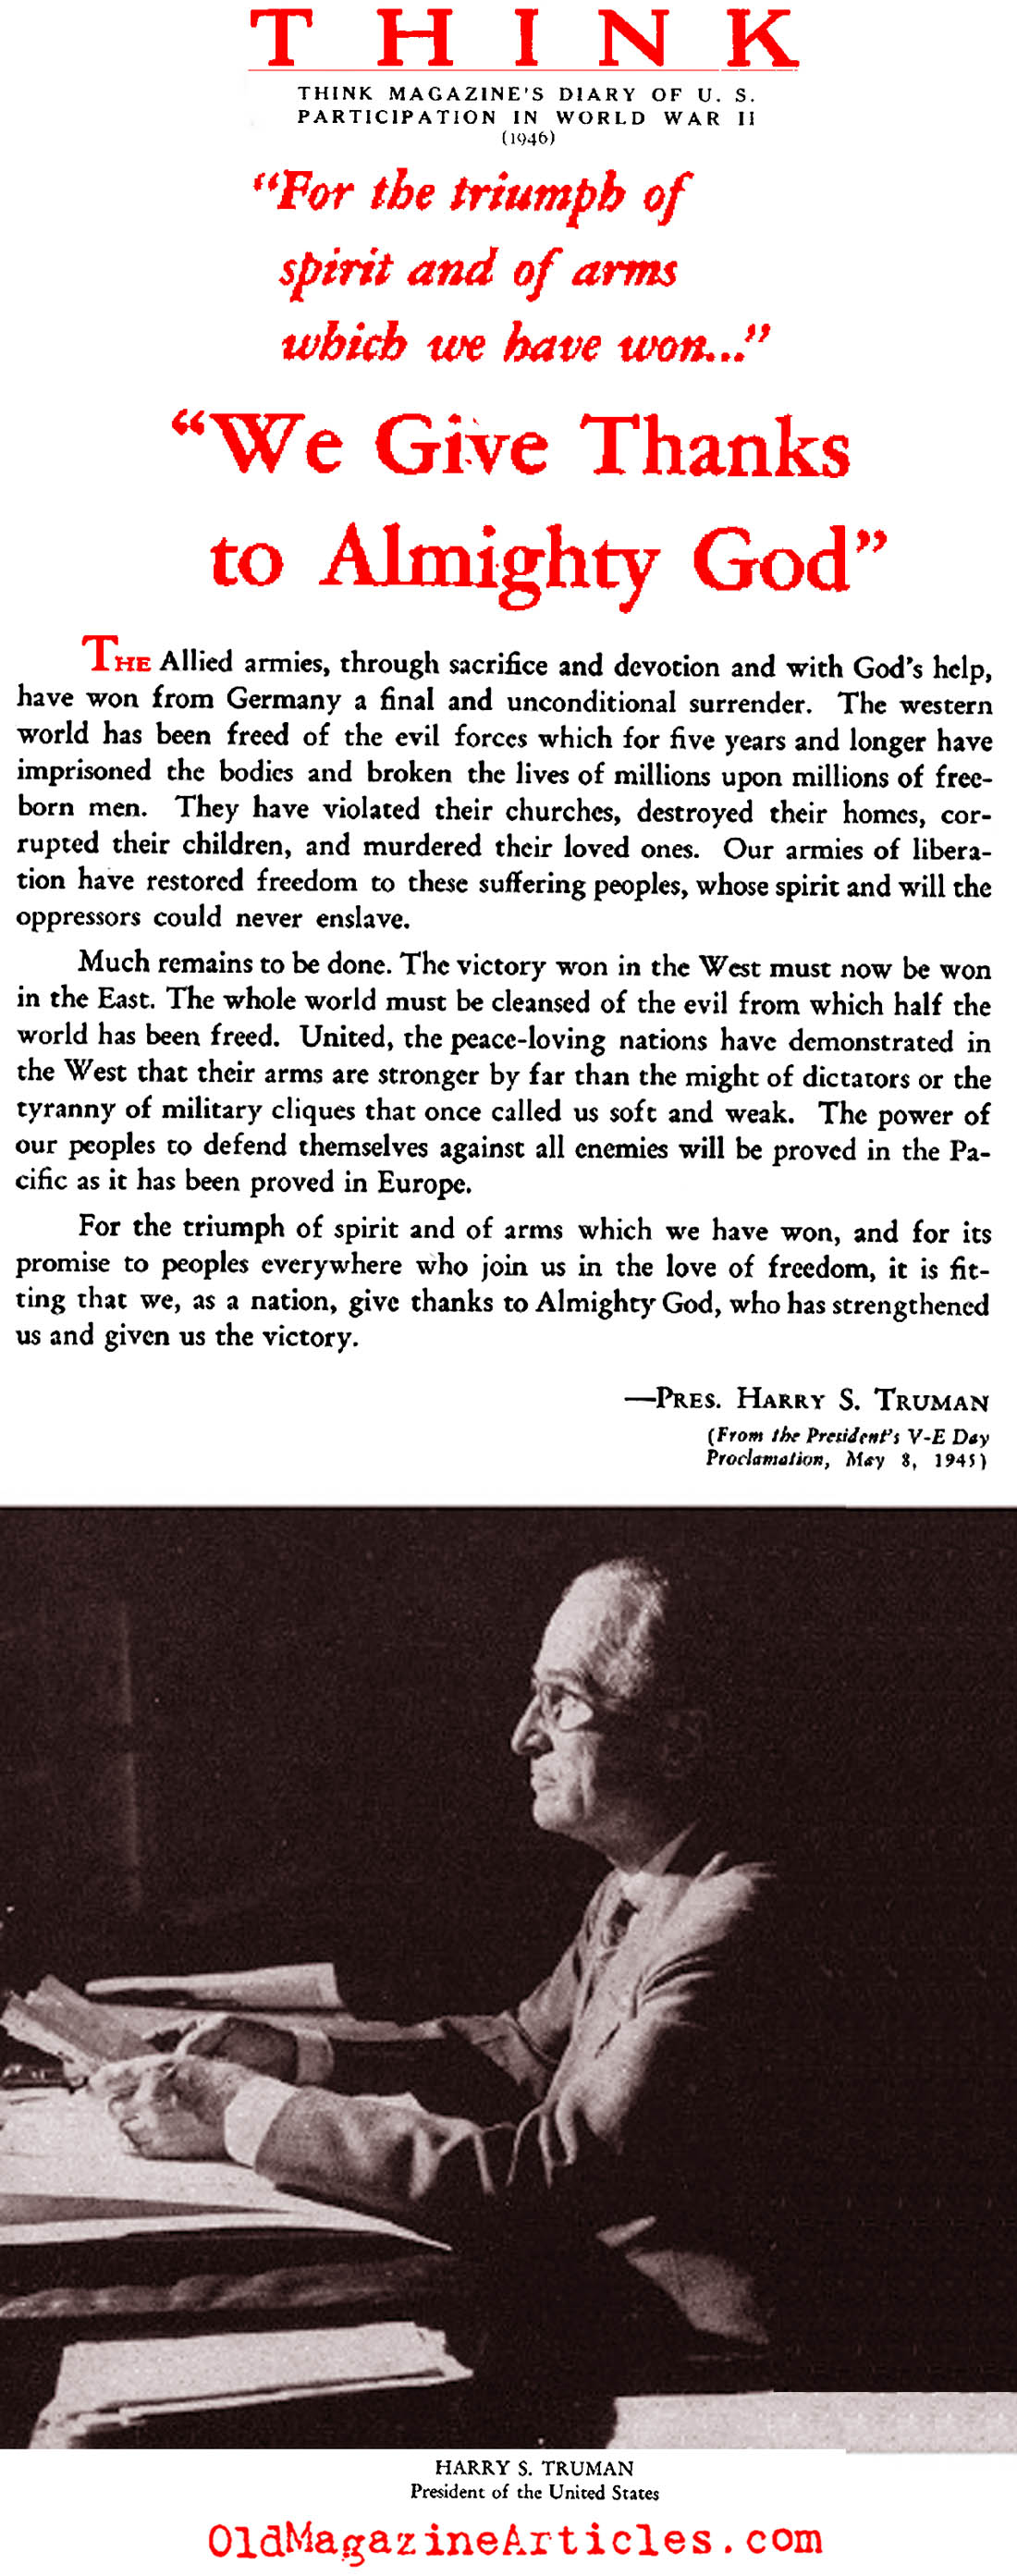 President Truman's VE-Day Proclamation (Think Magazine, 1946)